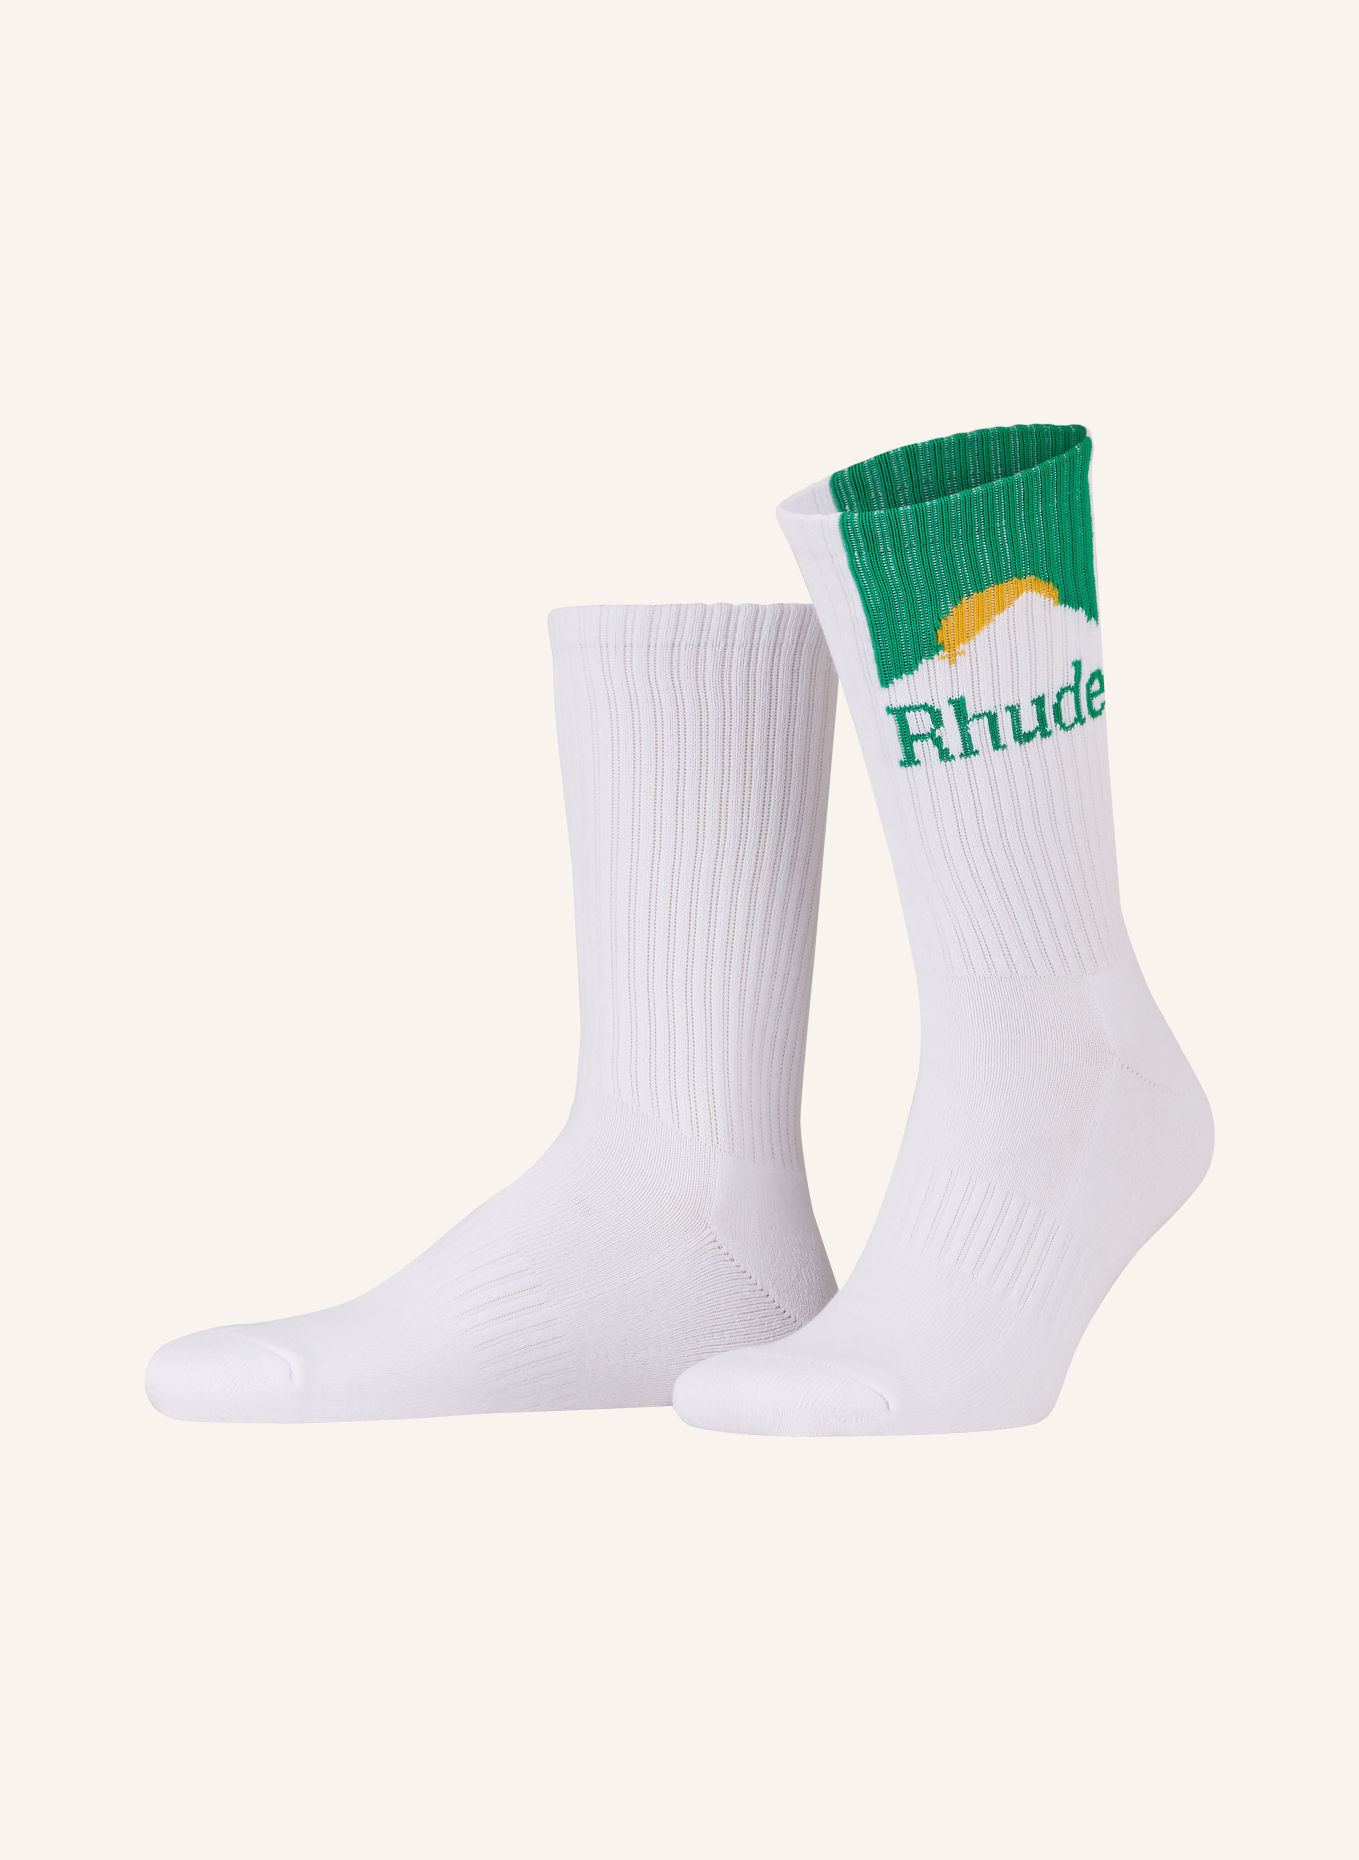 RHUDE Socken MOONLIGHT, Farbe: WHITE/GREEN/YELLOW (Bild 1)